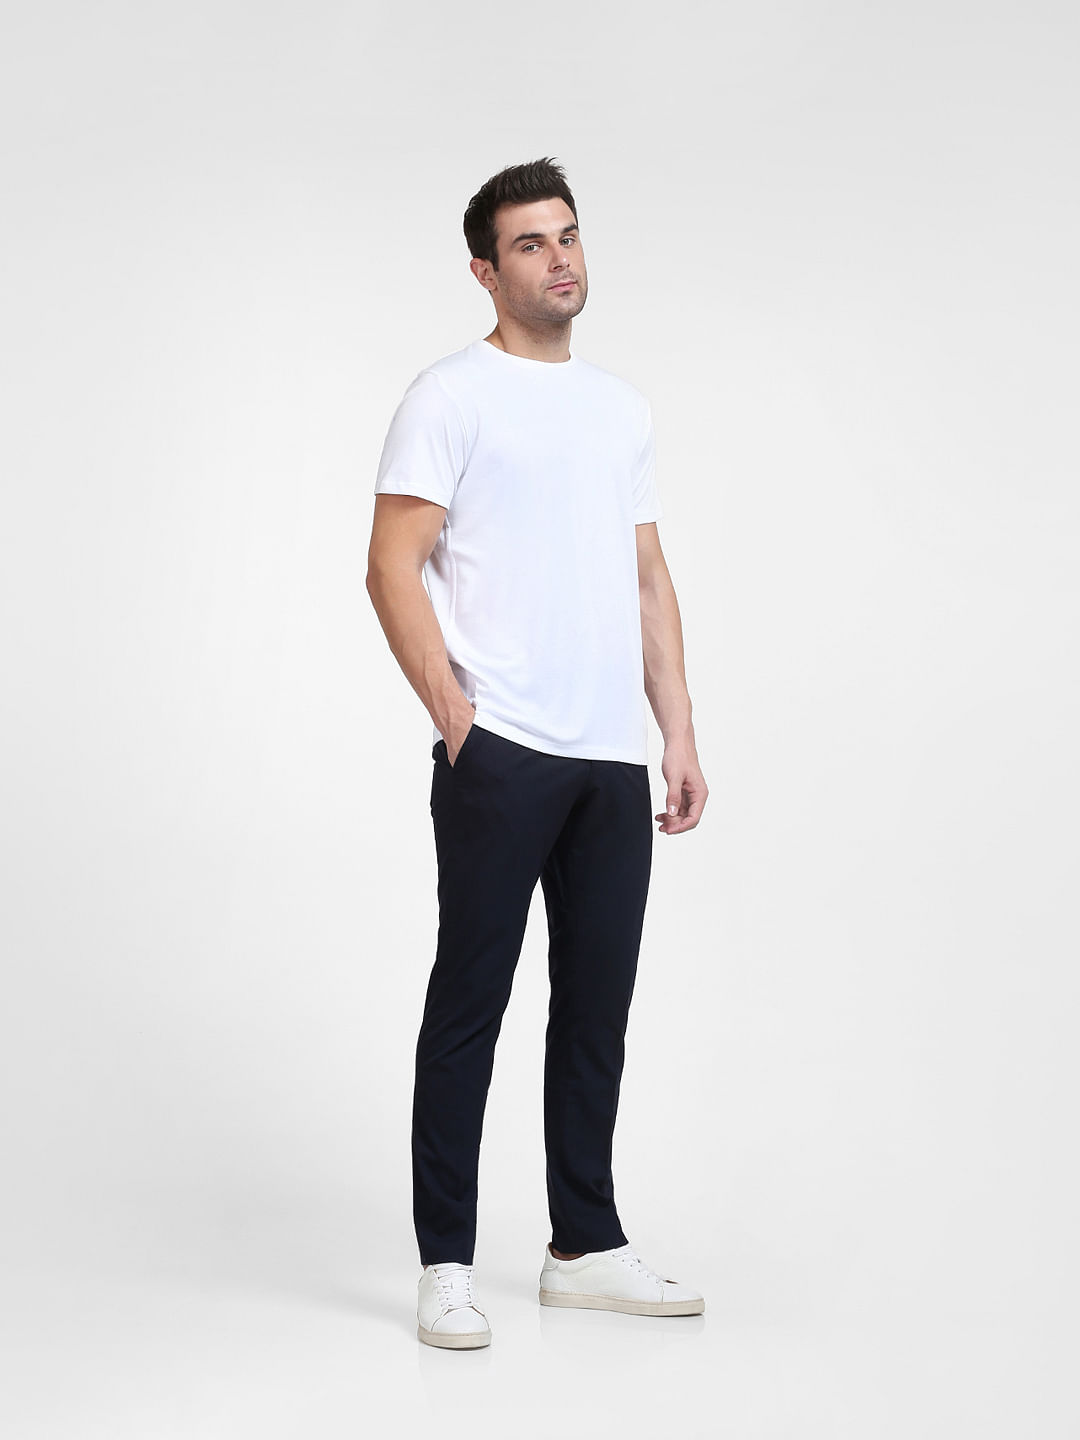 Kemi Telford white t-shirt | Clothing | Tate Shop | Tate